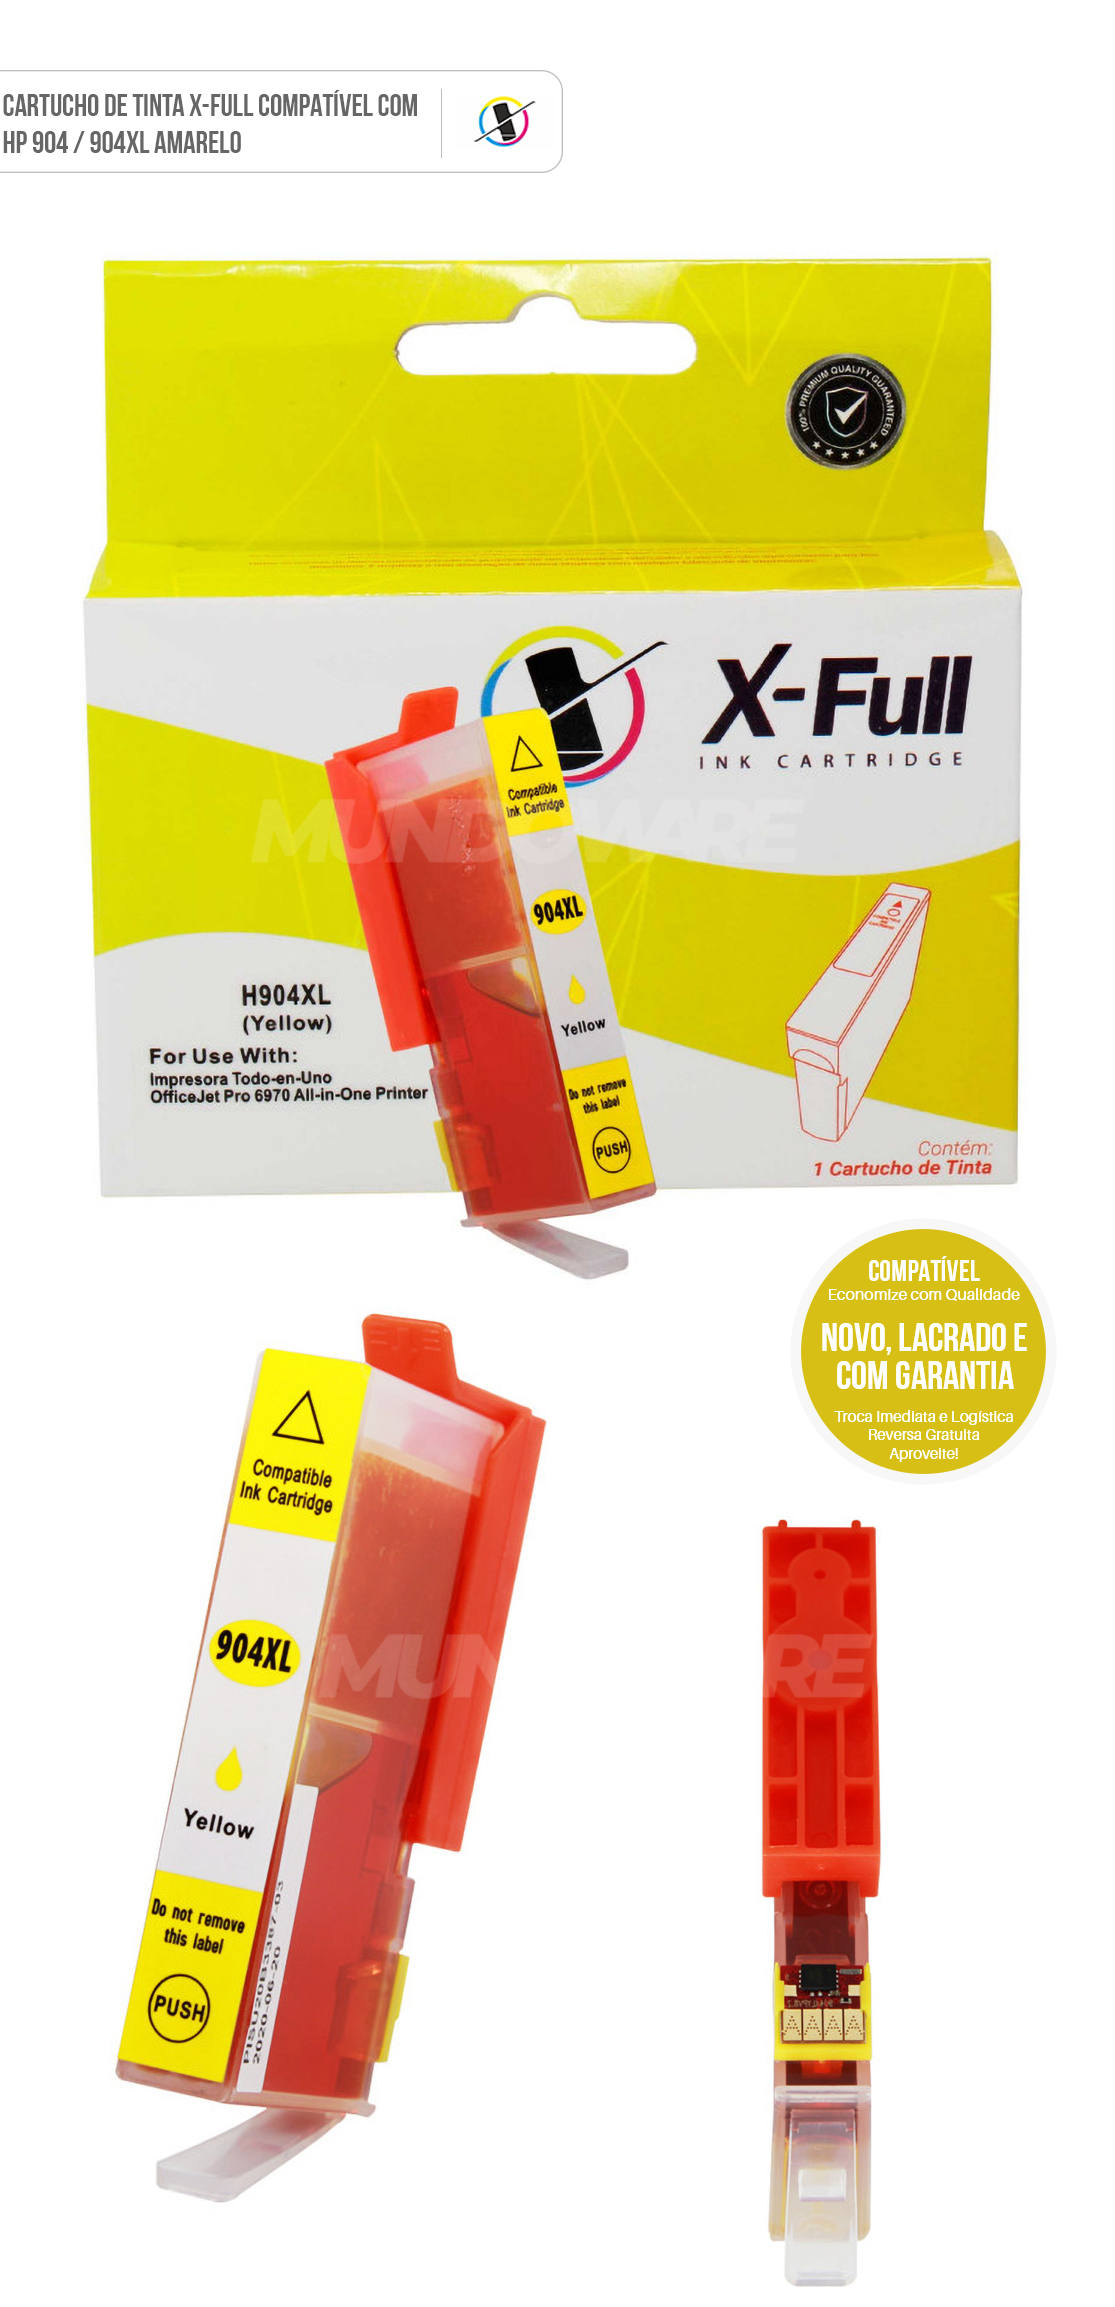 Cartucho de Tinta X-Full Compatível com HP 904xl 904 para Impressora Officejet Pro 6970 Amarelo 14ml